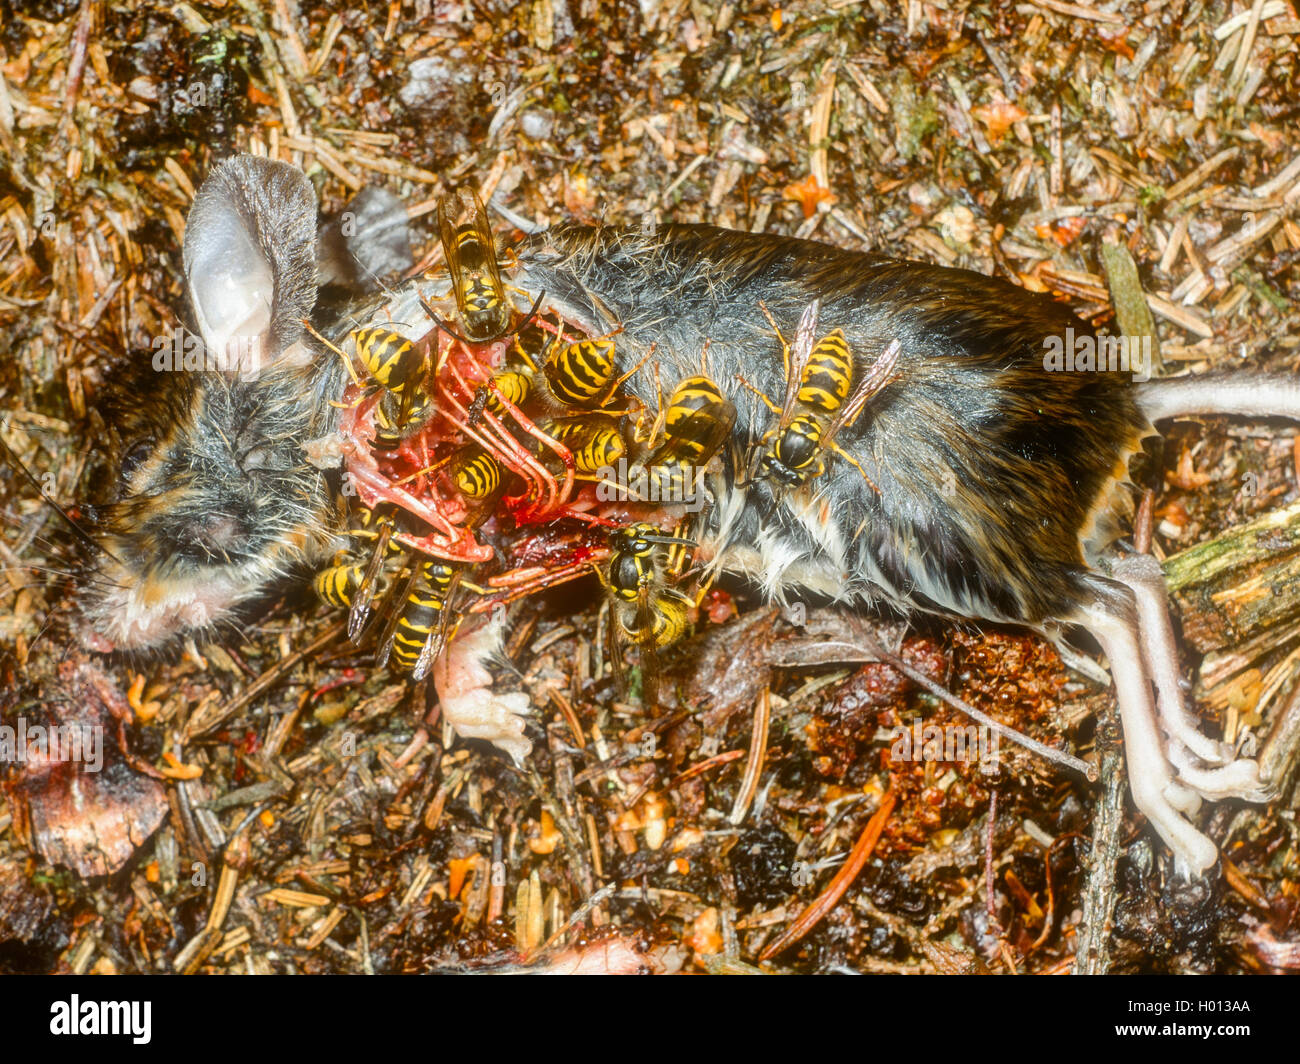 Saxon wasp (Dolichovespula saxonica, Vespula saxonica), Wasps feeding on a dead mouse, Germany Stock Photo